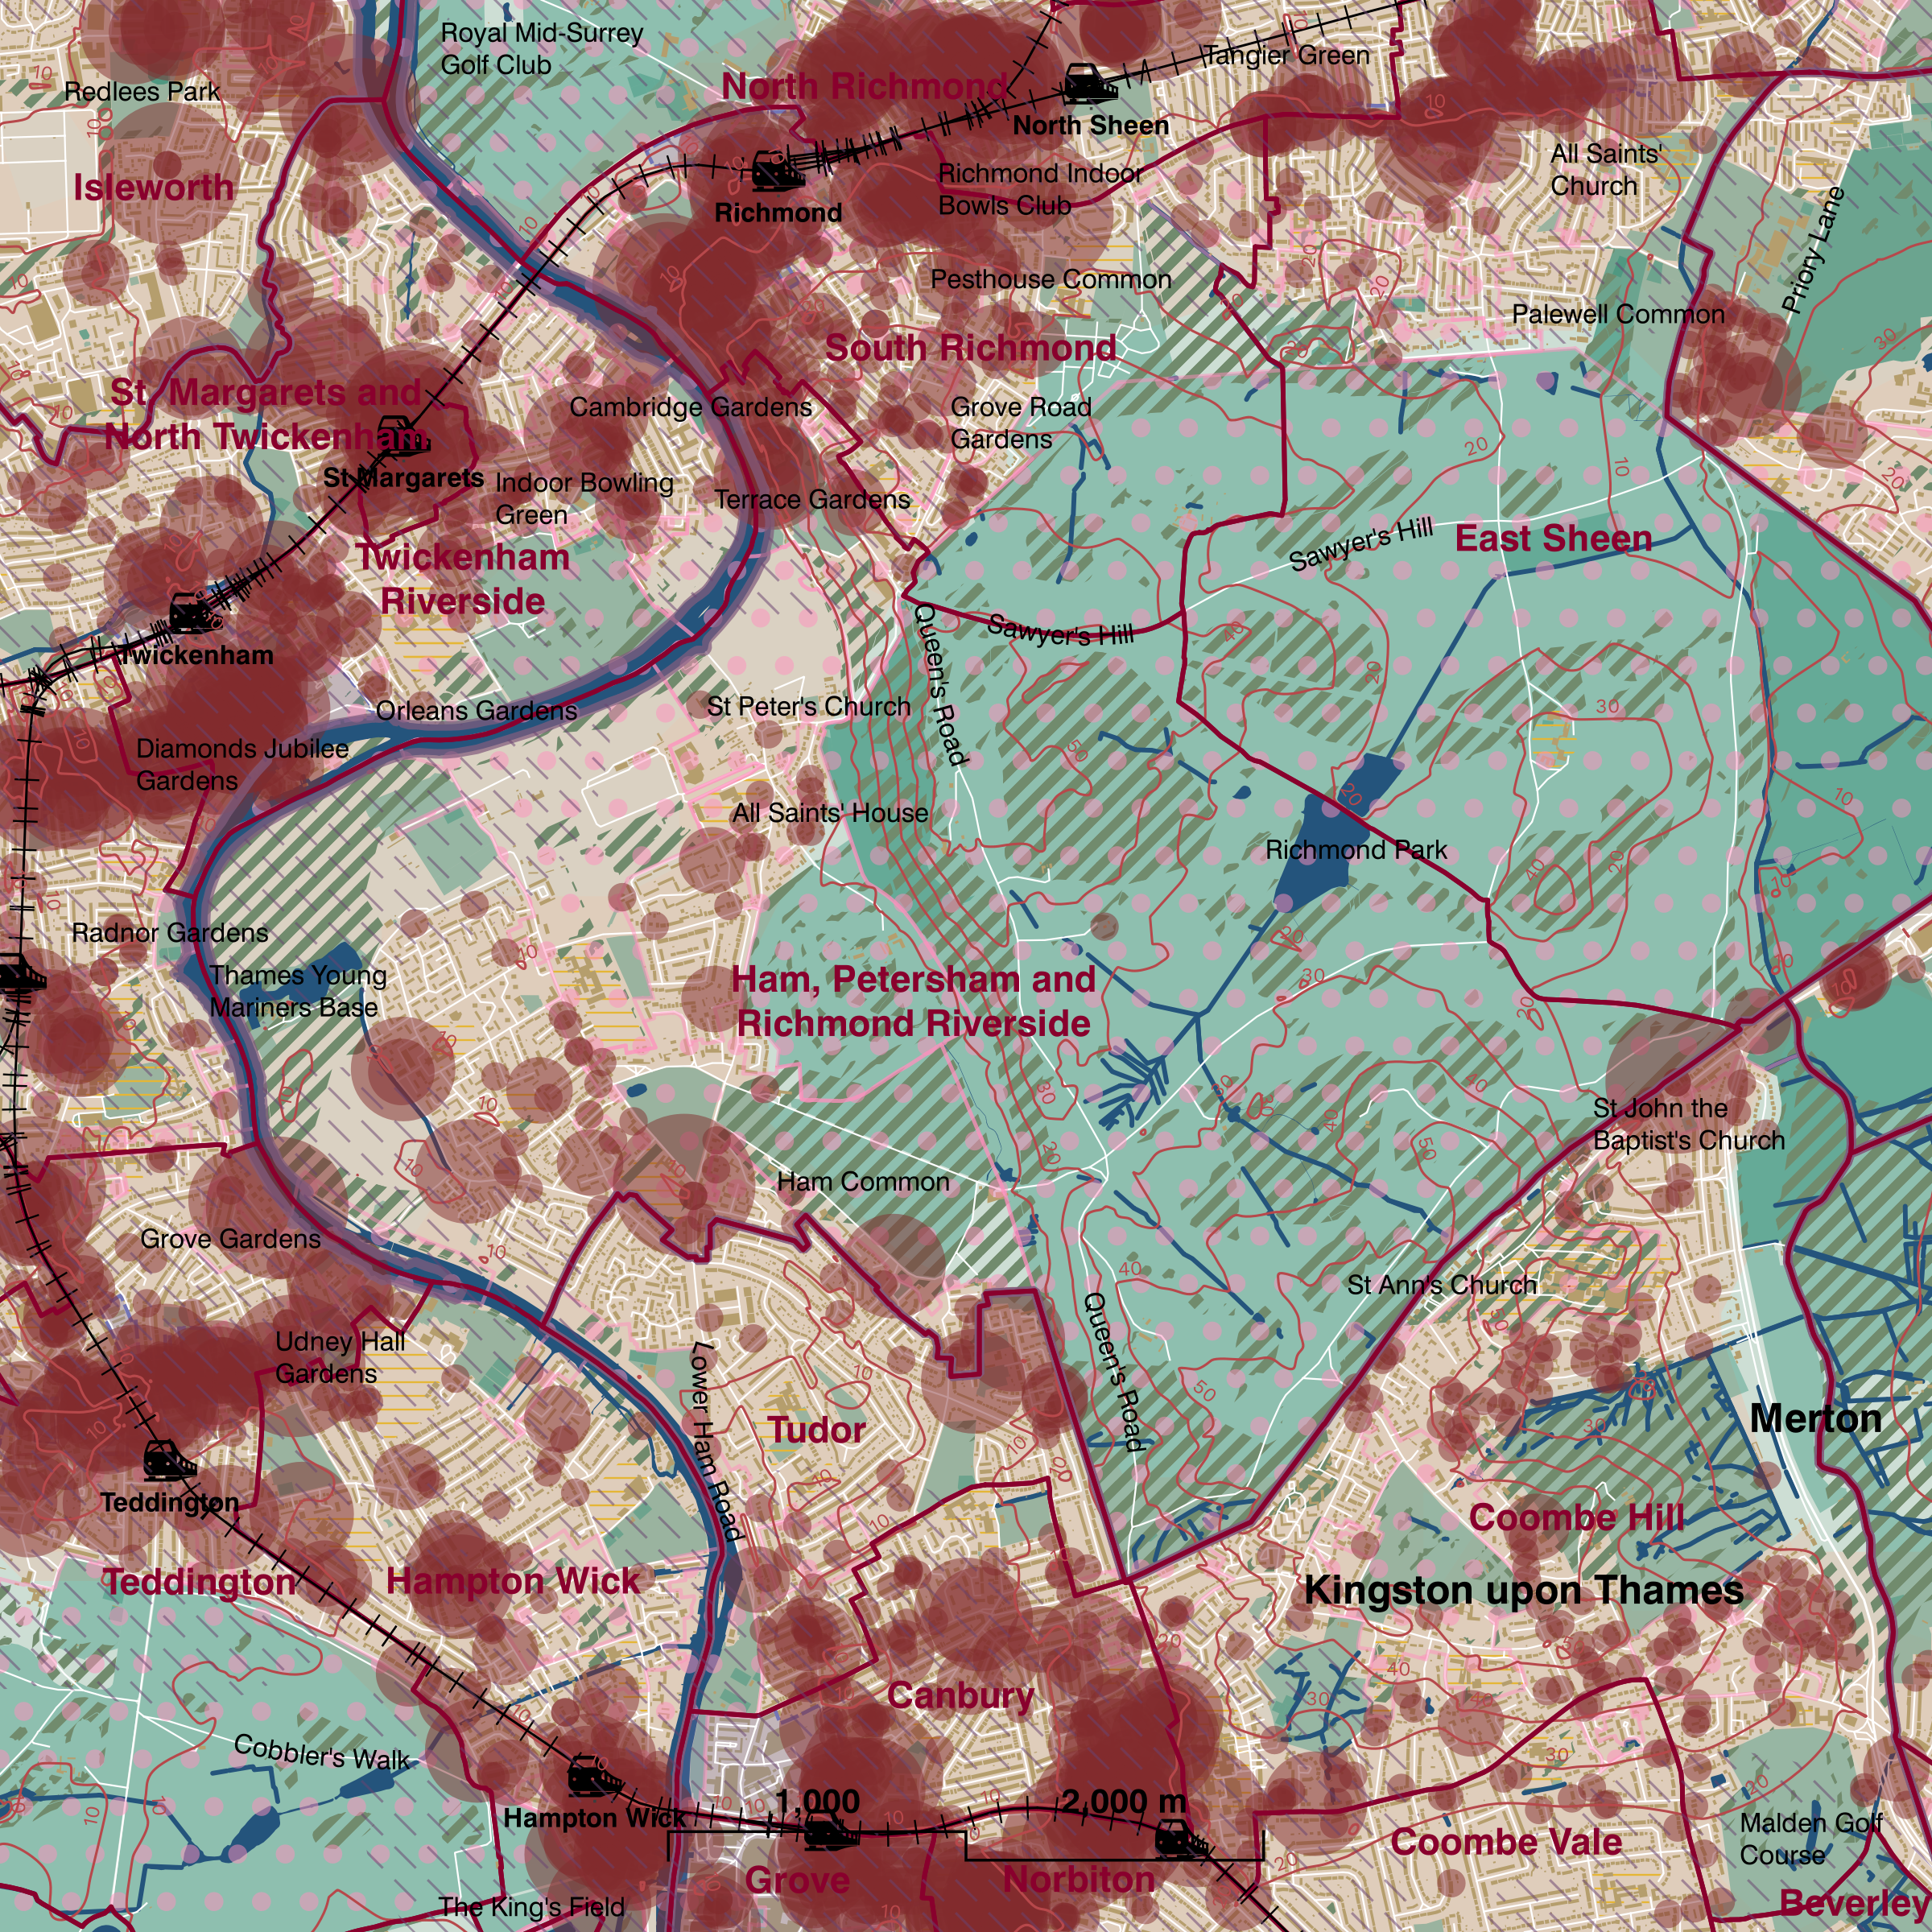 Map of Ham, Petersham and Richmond Riverside ward